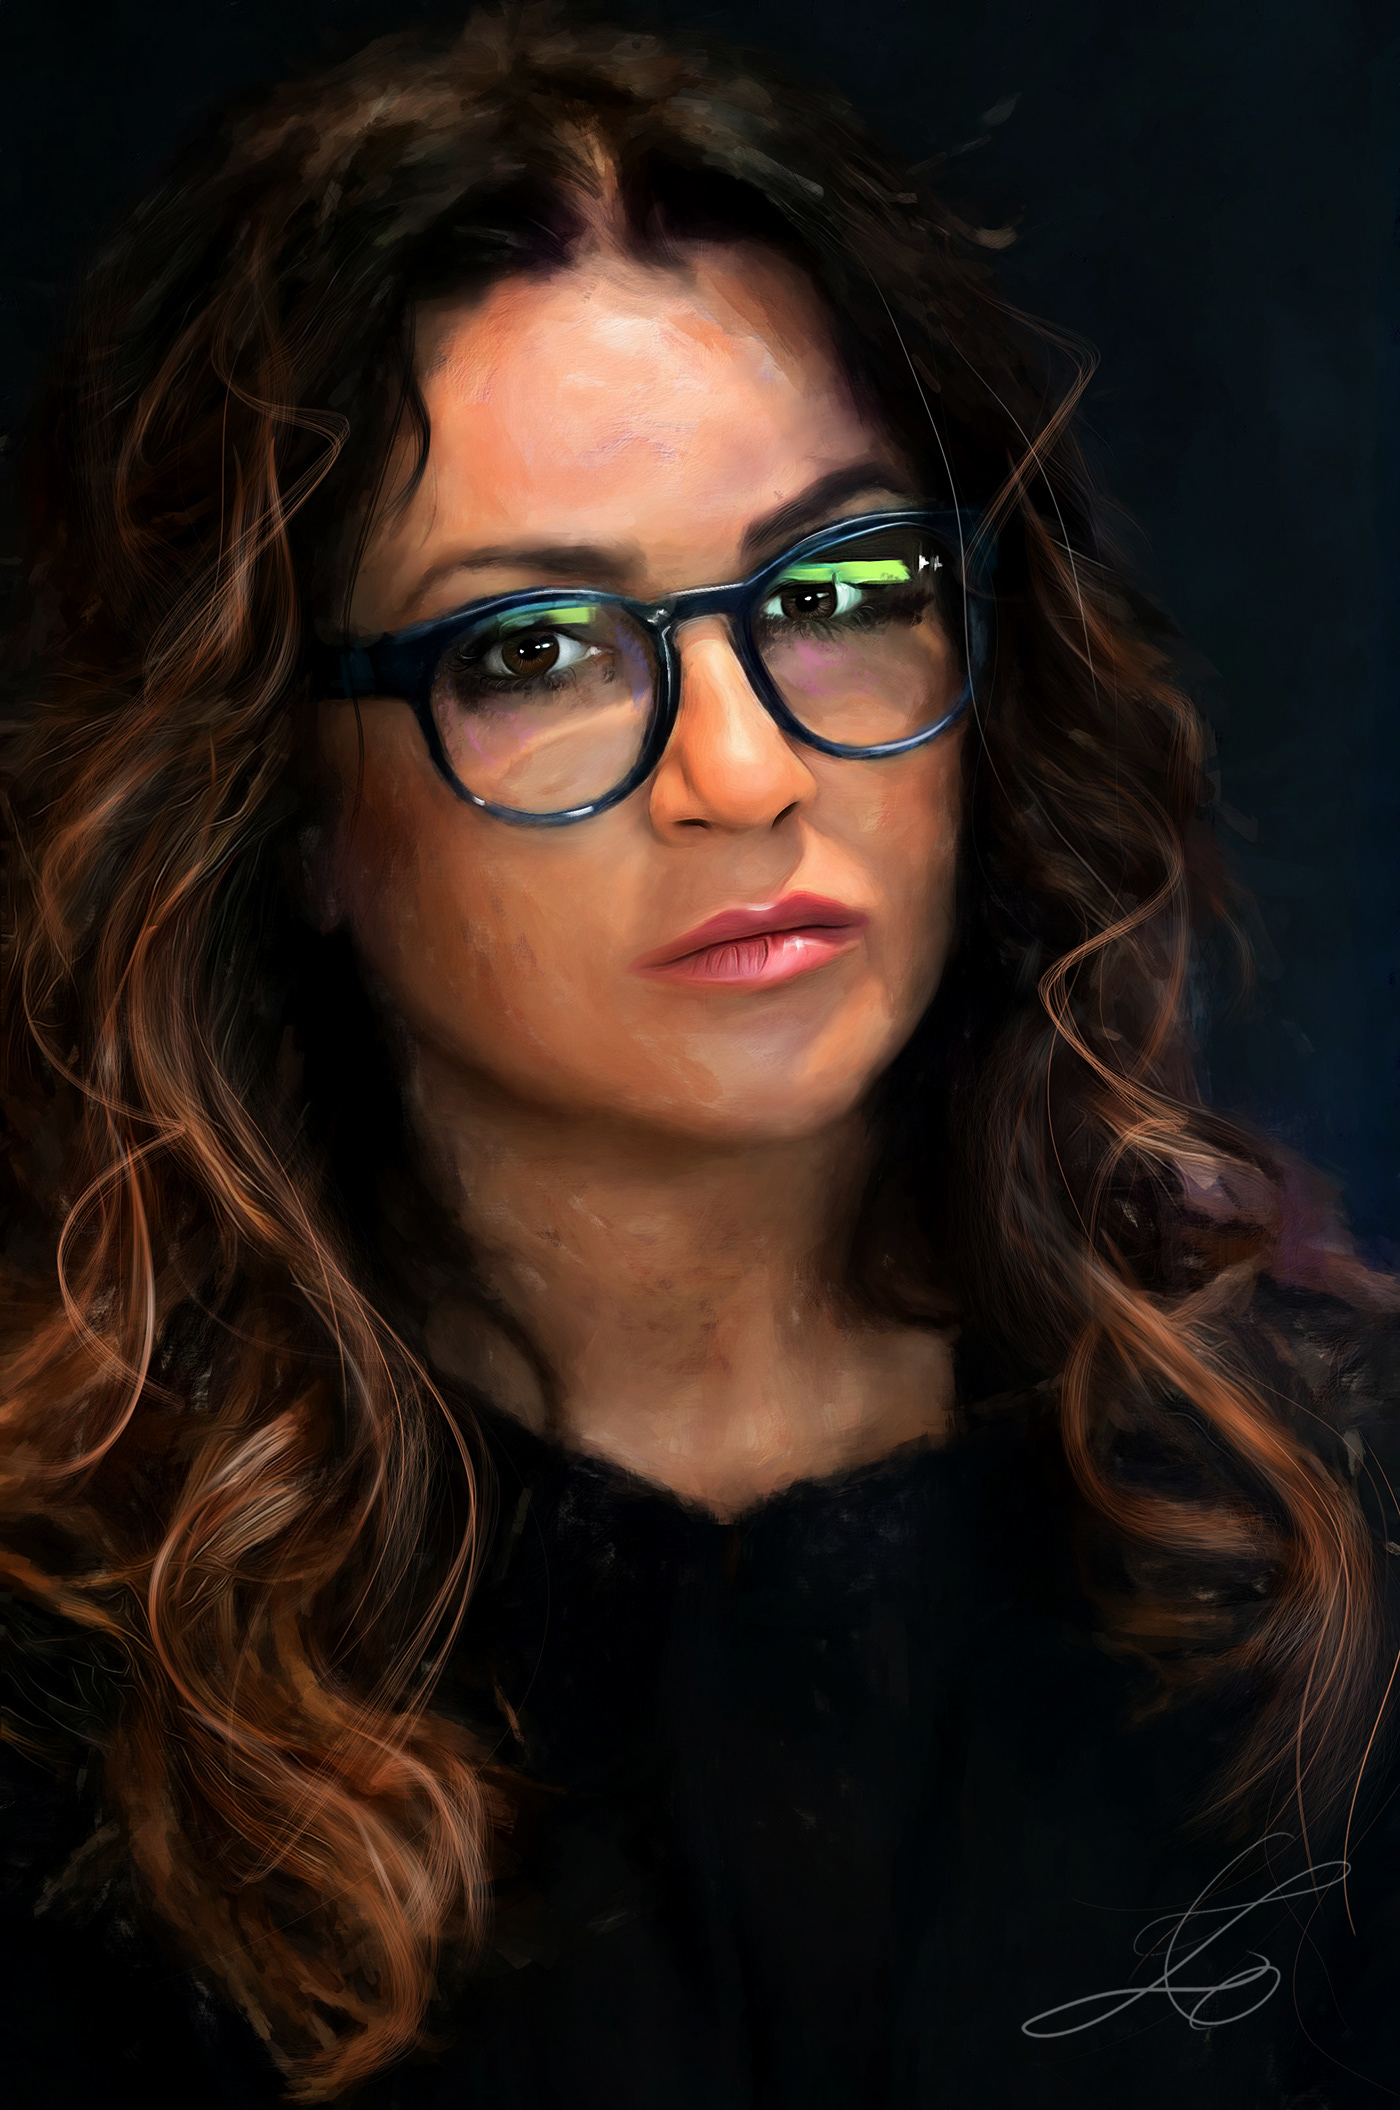 beata tadla beata tadla jurnalist digital painting digital portrait girls with glasses polish jurnalist